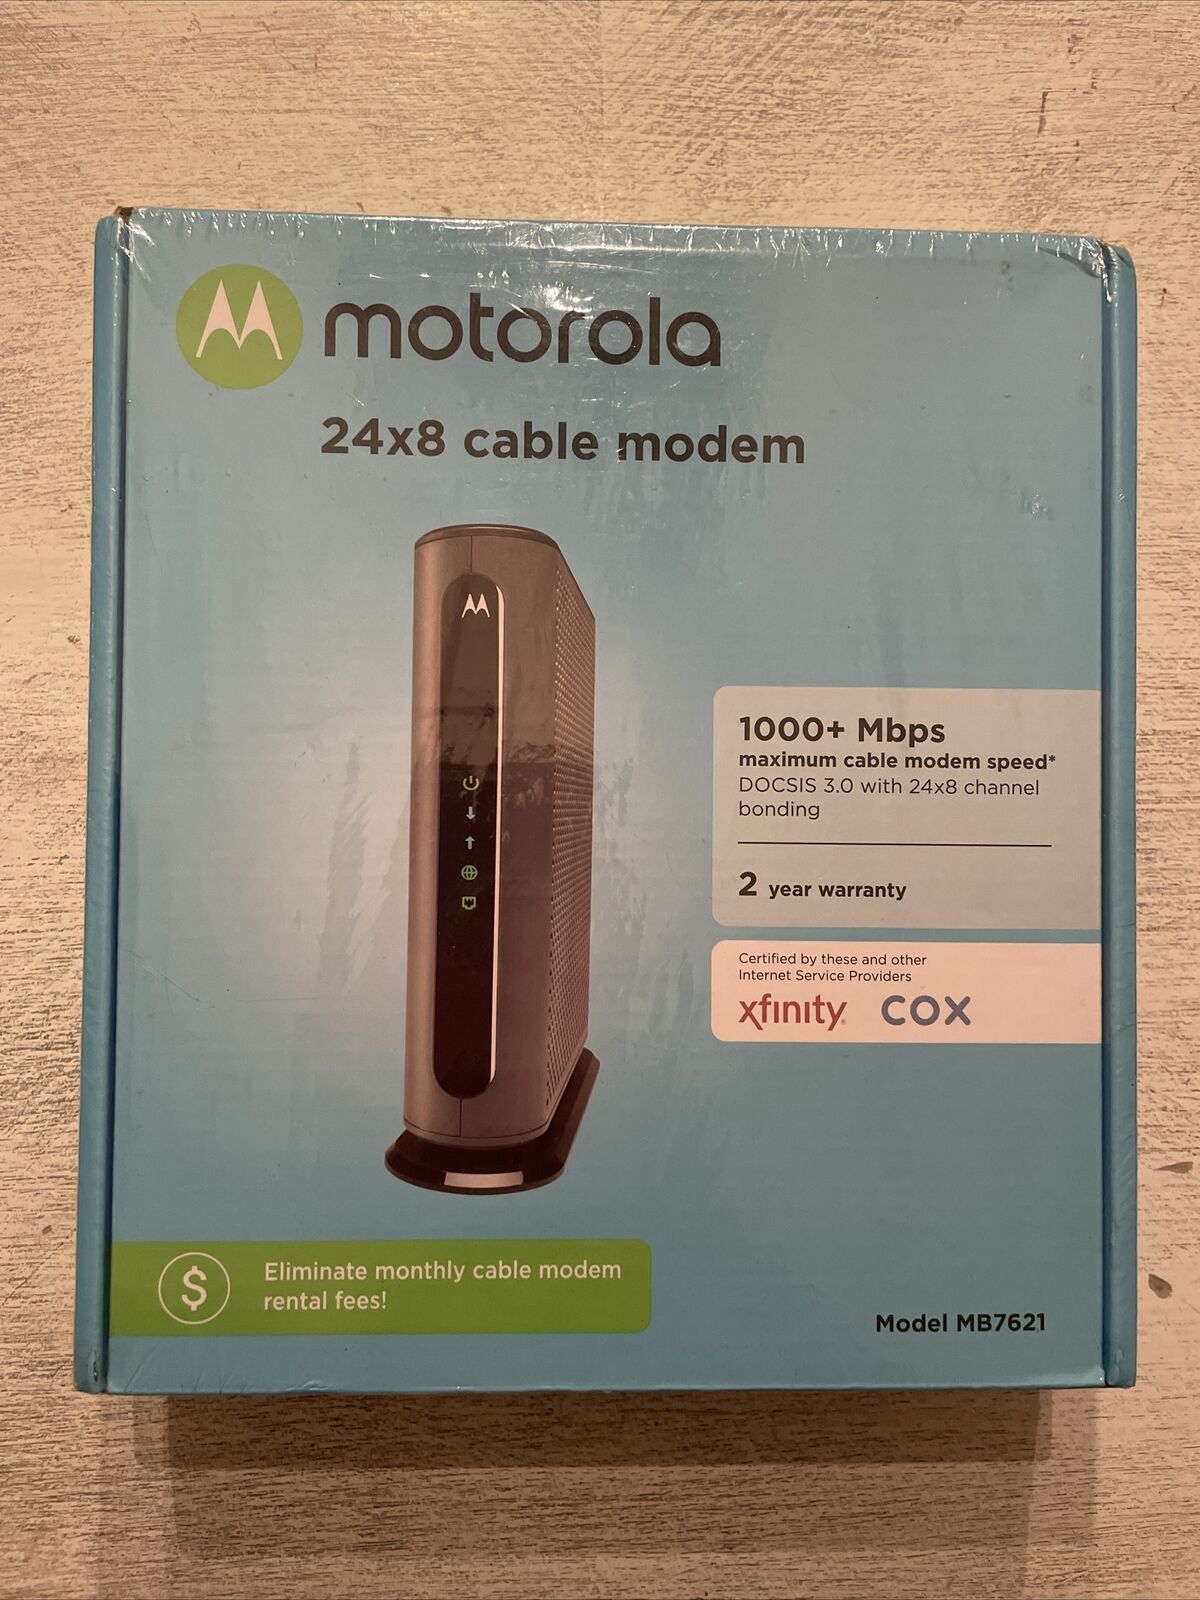 Factory NEW/SEALED Motorola 24x8 Cabel Modem Model MB7621 DOCSIS 3.0